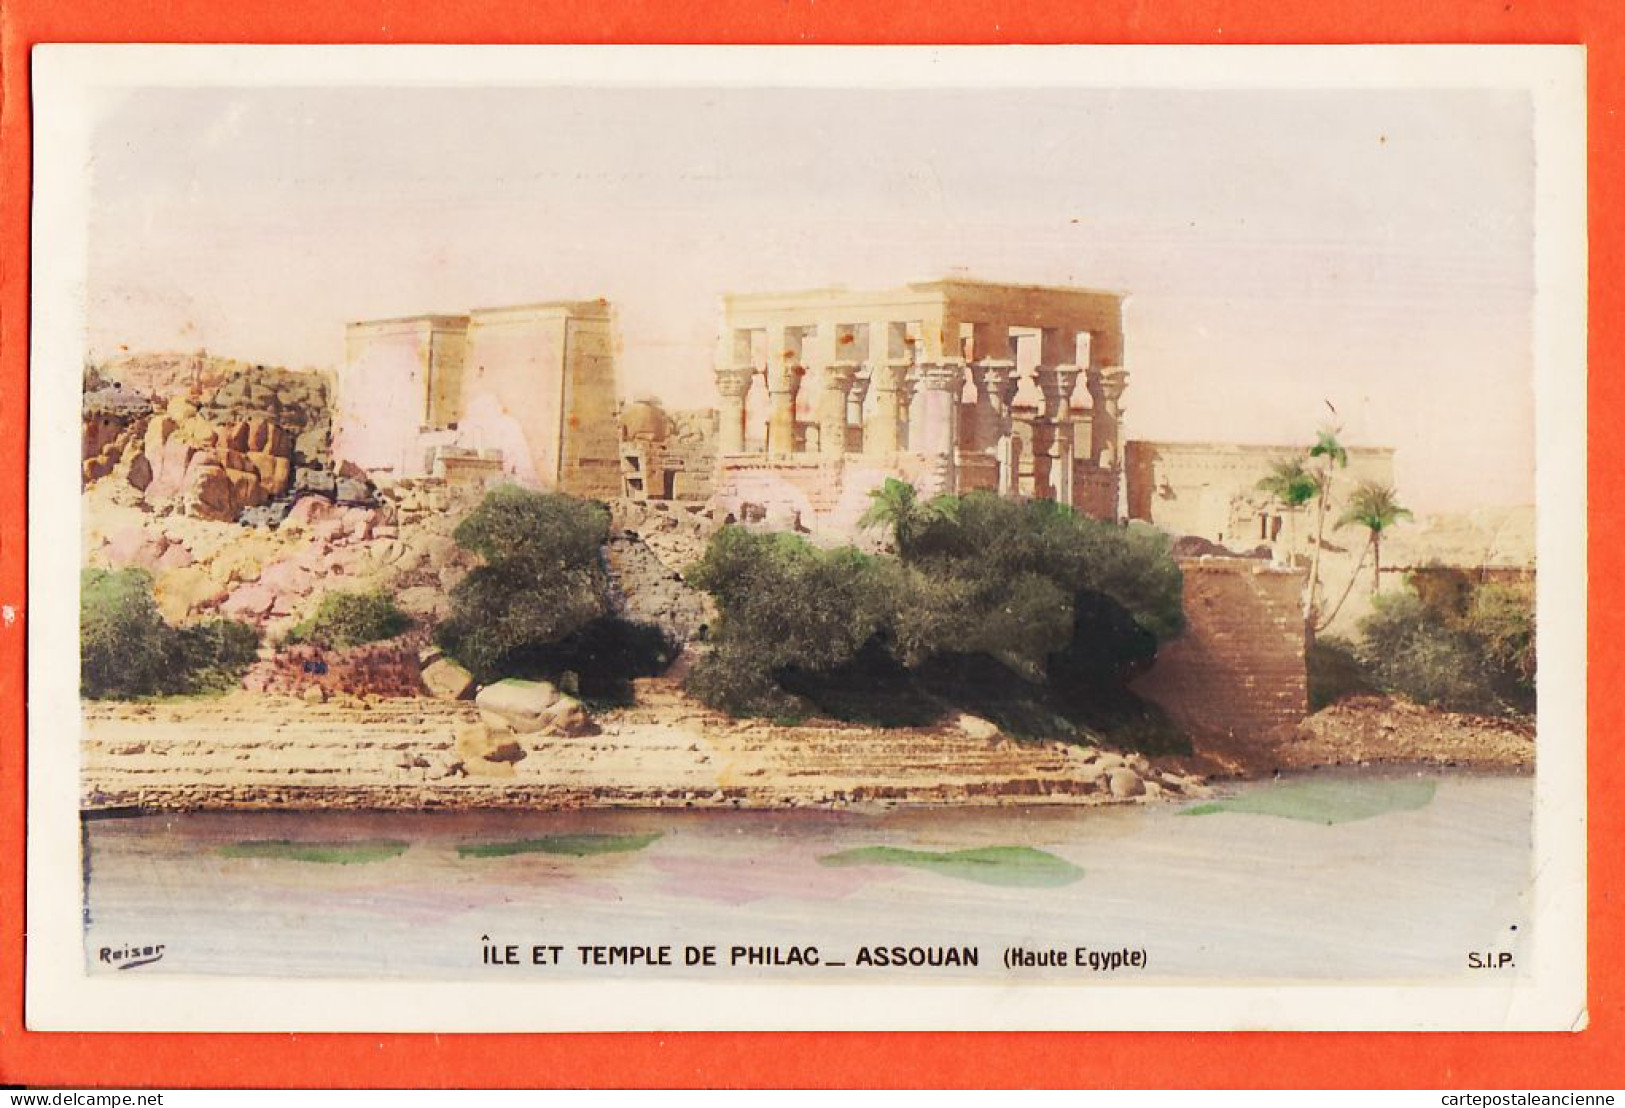 29577 / ⭐ ◉ ASSOUAN ILE Temple PHILAC (1) Ägypten Island Philae Kiosk Egypte Egypt 1905s Photo-Bromure REISER S.I.P - Assouan